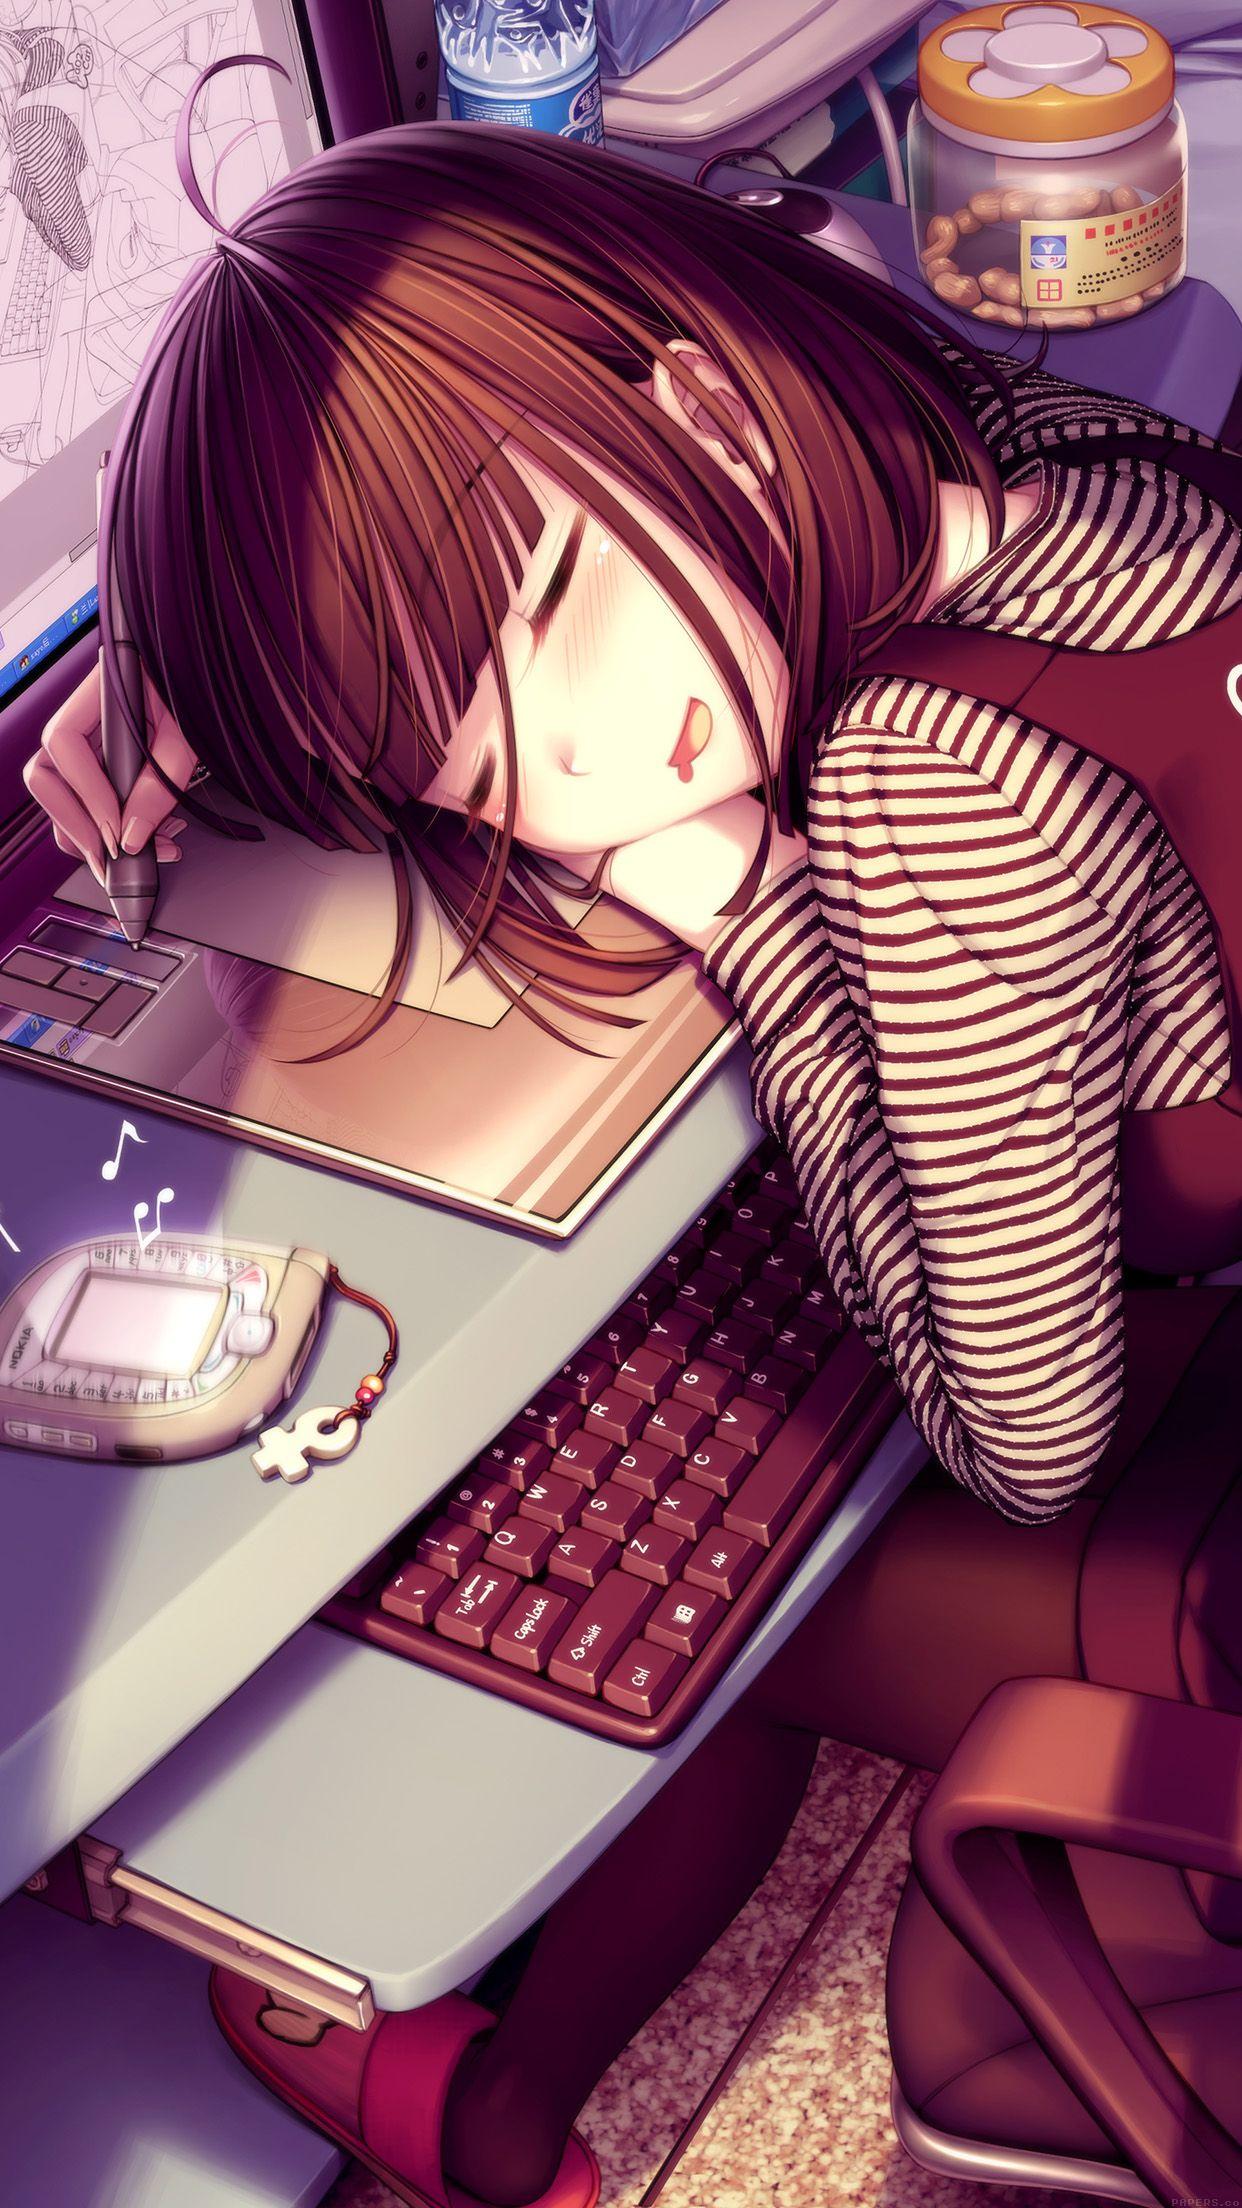 Illustor Anime Art Girl Sleepin for iPhone